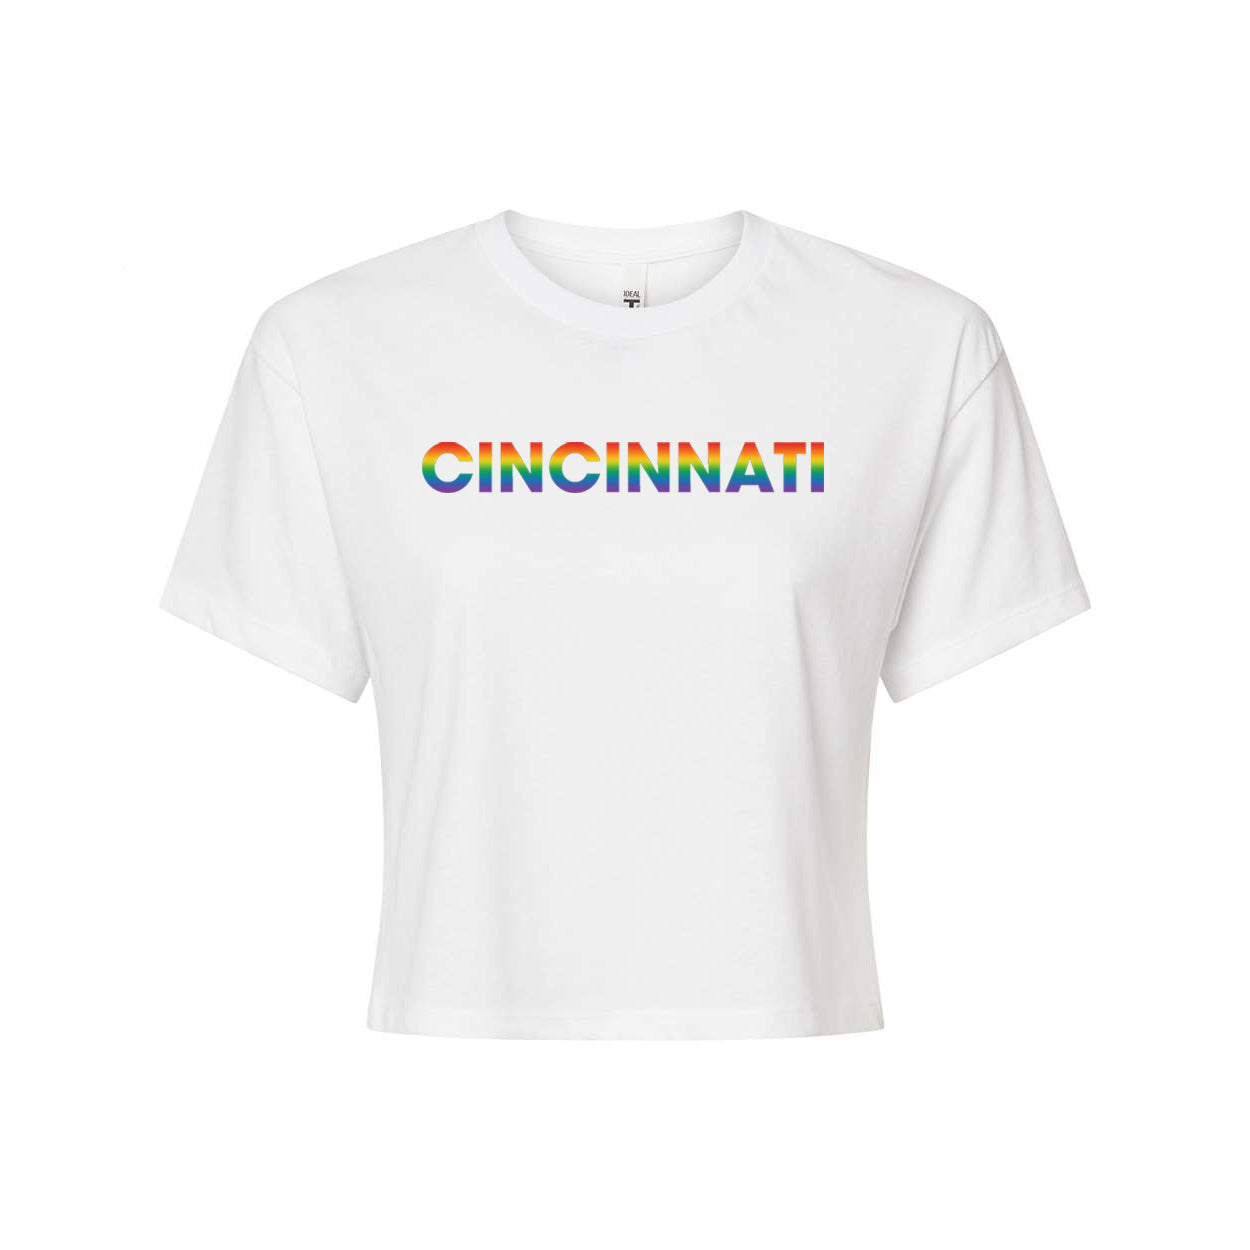 Cincinnati - Pride Front - Women's Boutique Crop